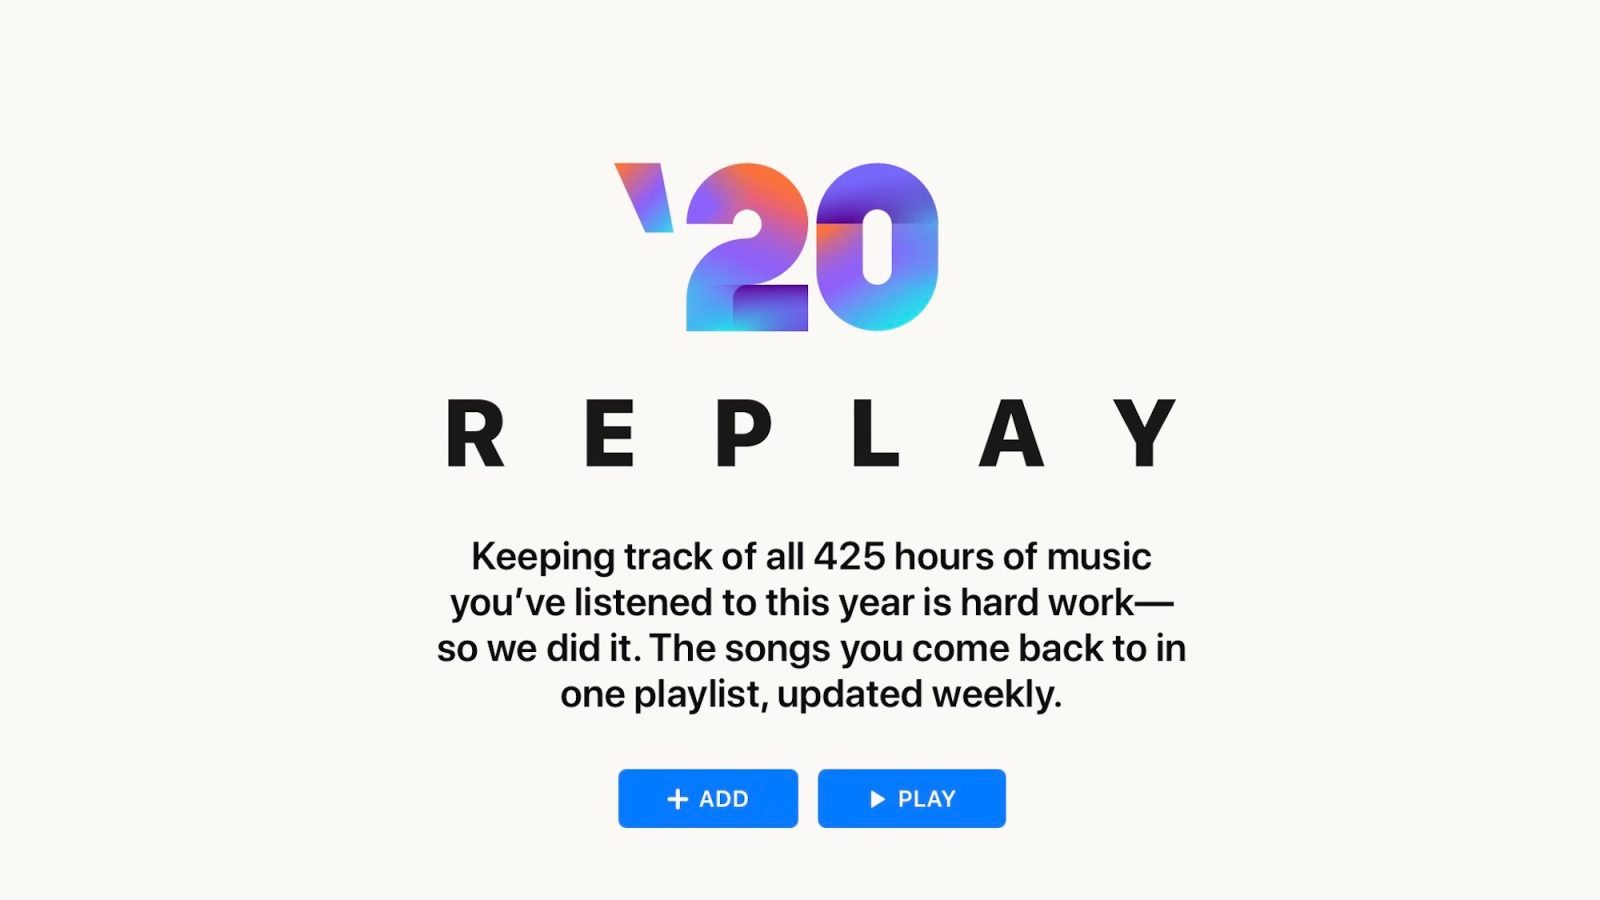 apple music replay 2020